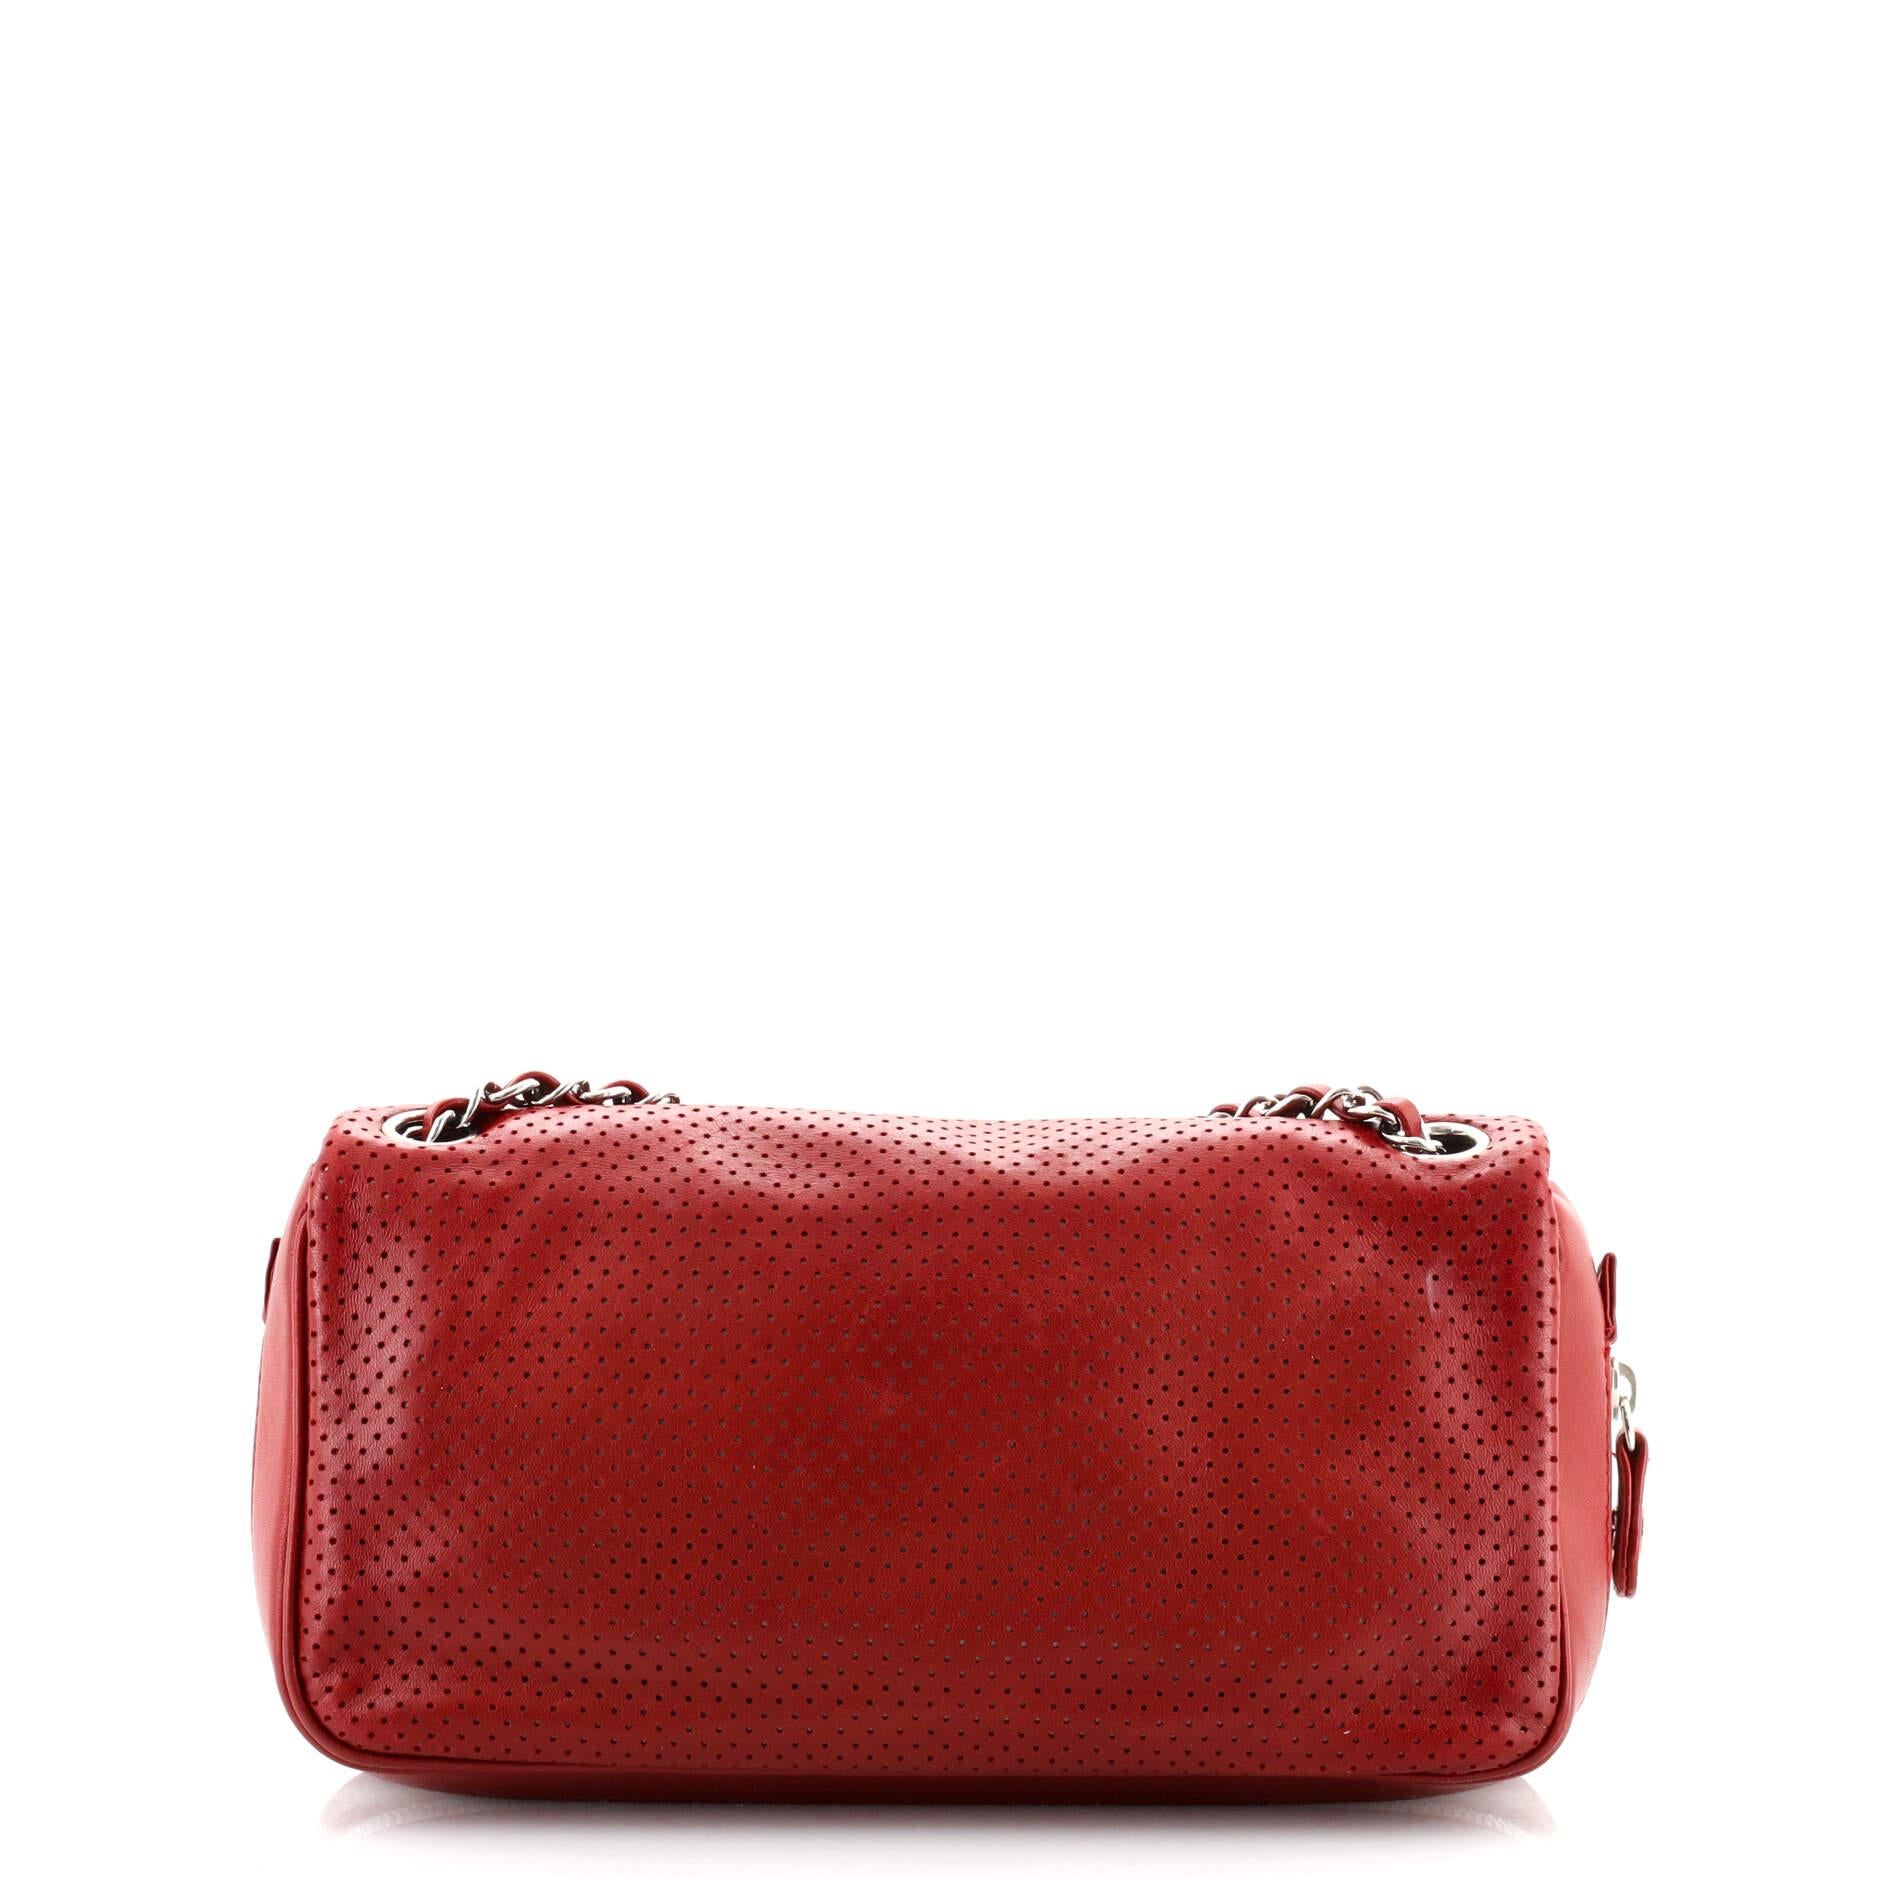 Red Chanel Baseball Spirit Flap Bag Perforated Leather Medium